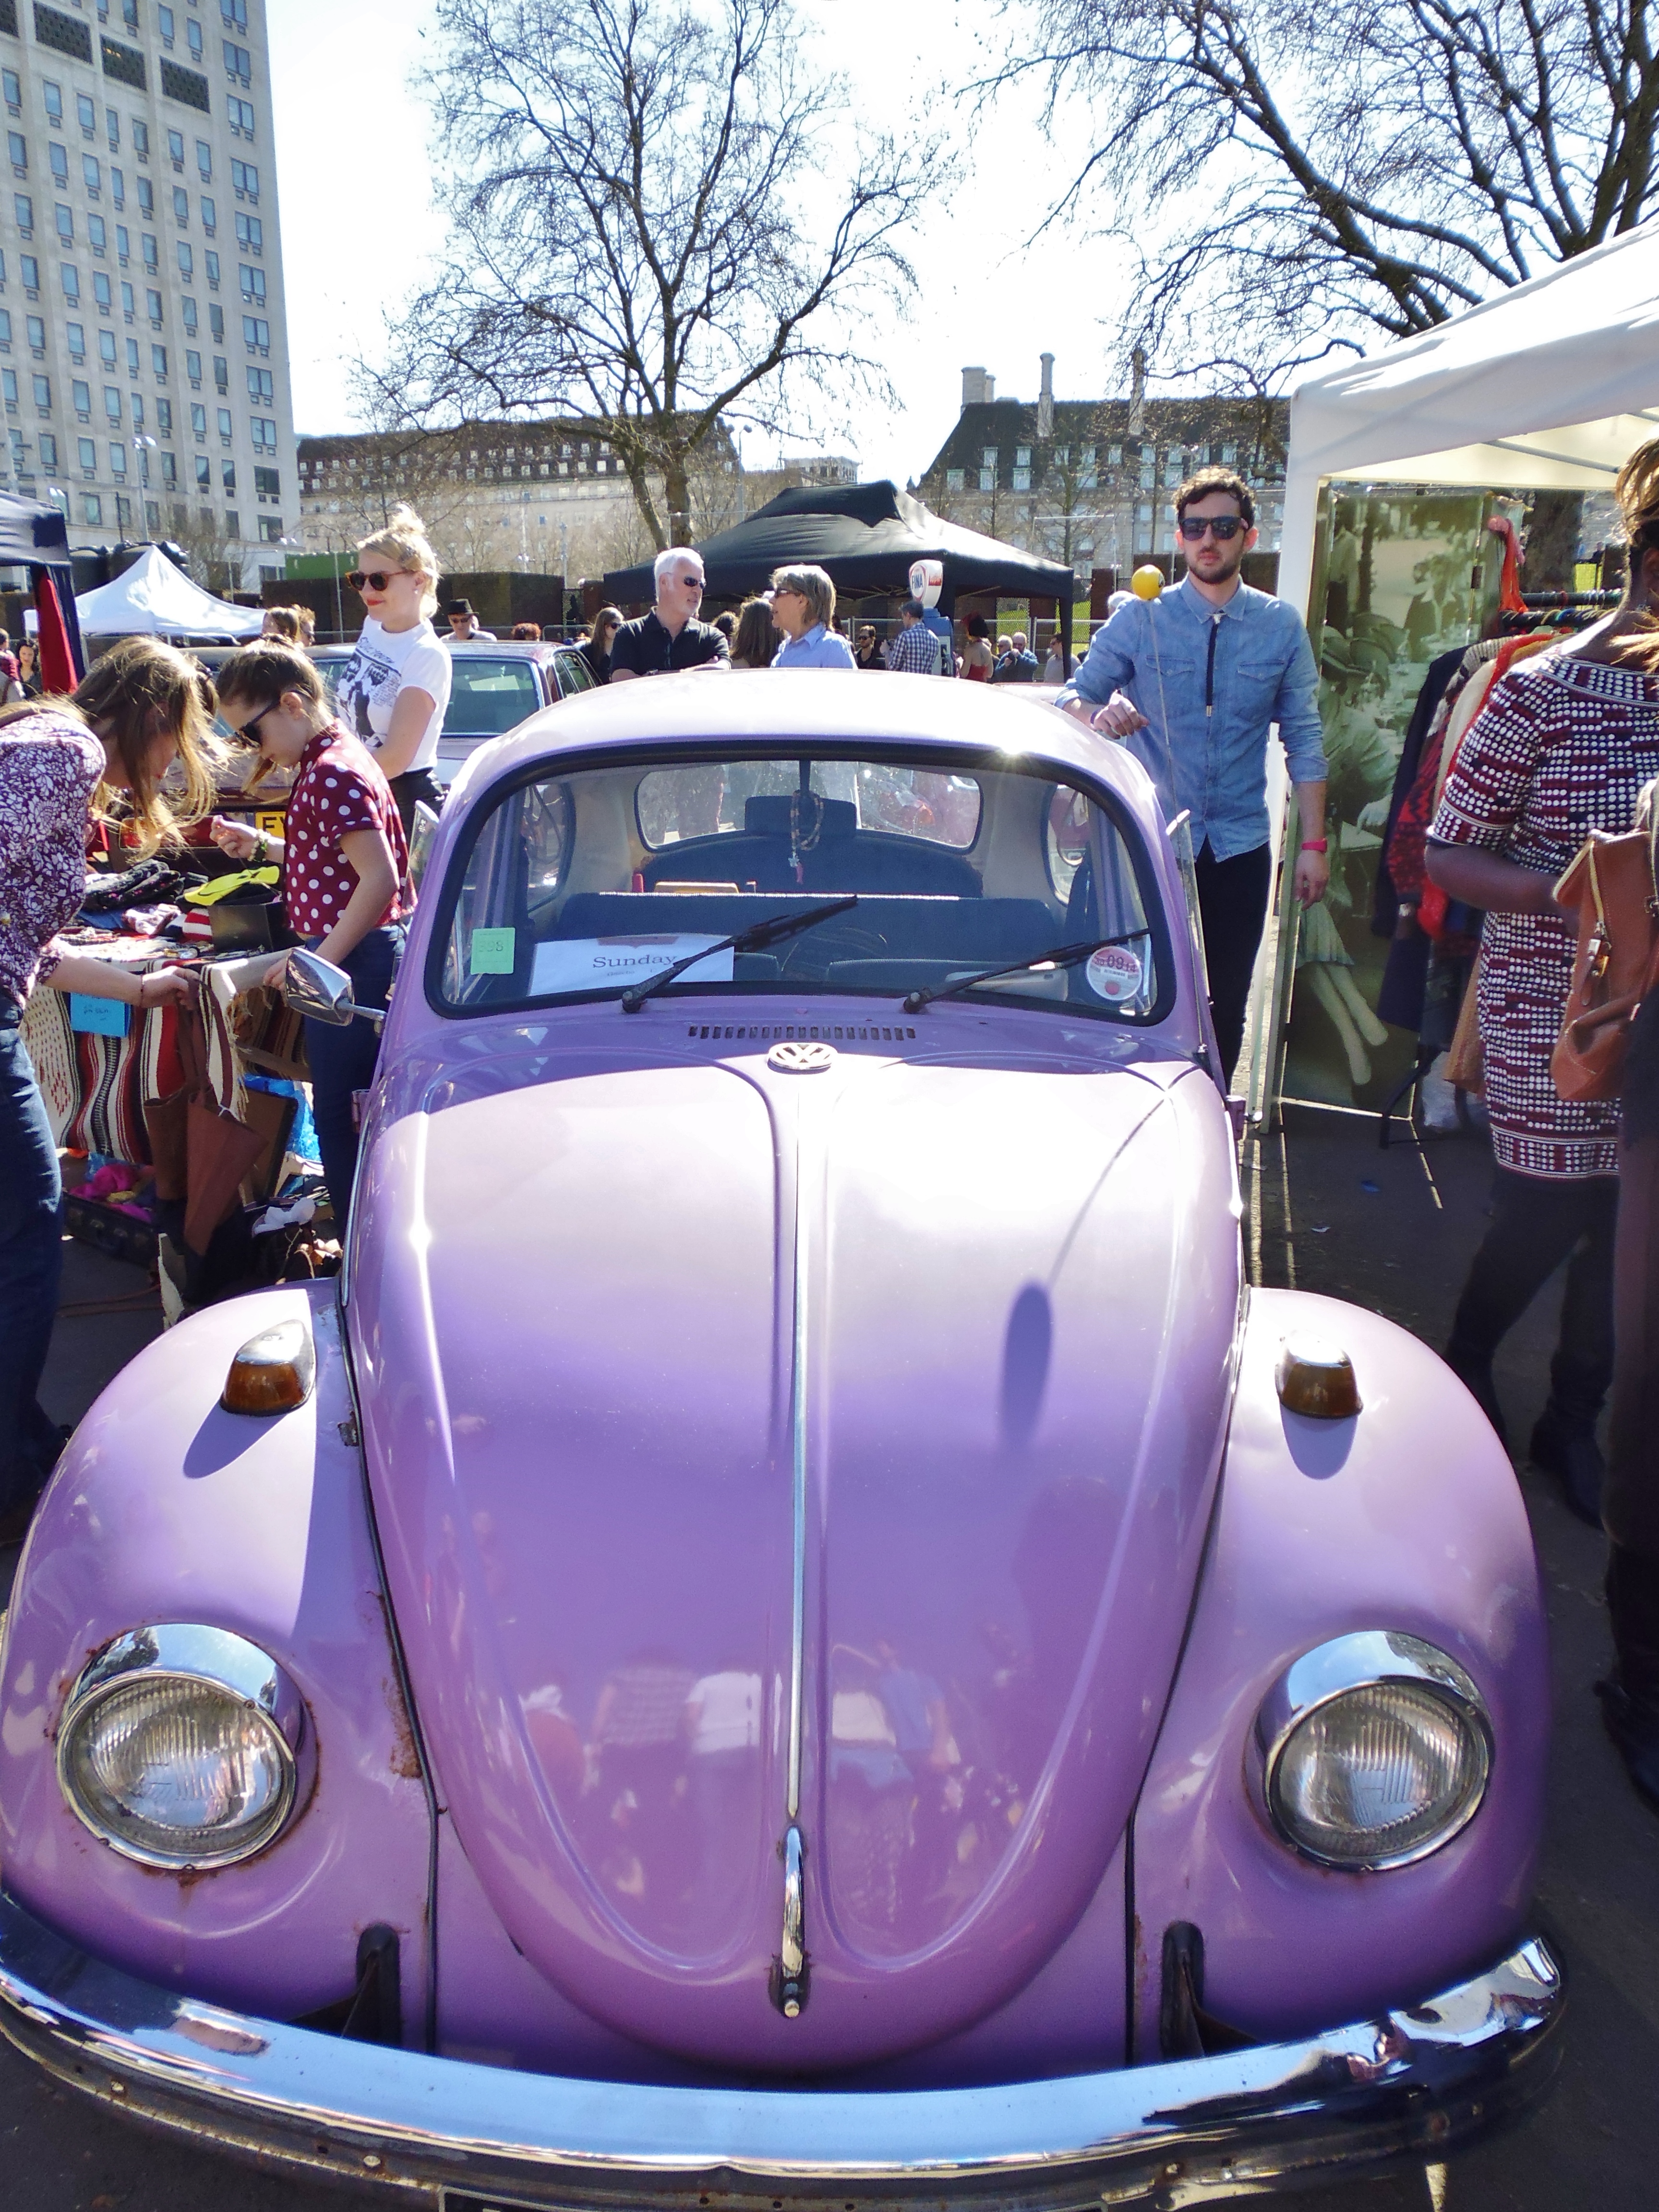 purple buggy car